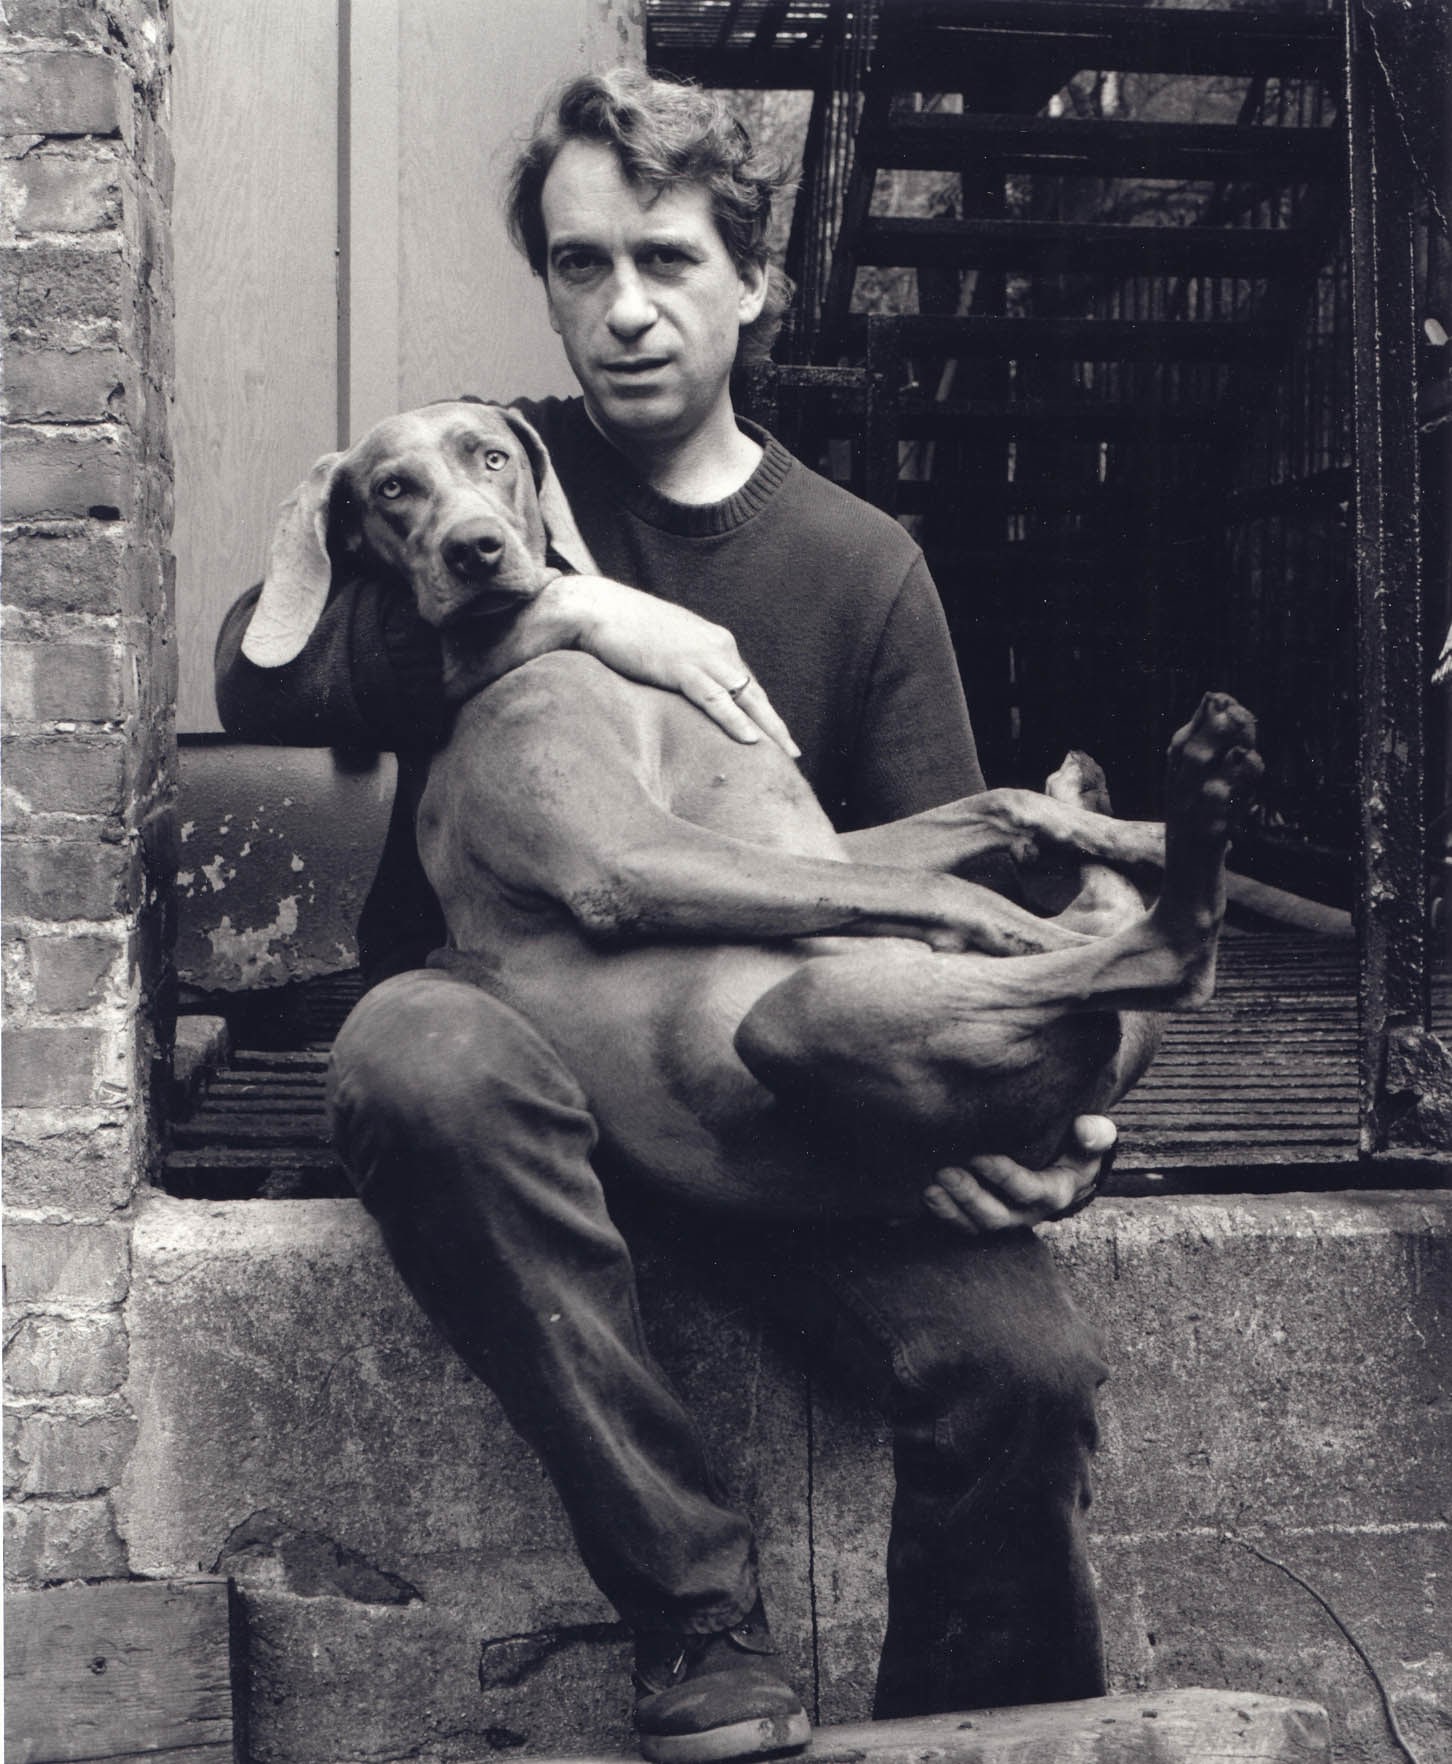 William Wegman, New York City, 1986, 10 x 8 Silver Gelatin Photograph